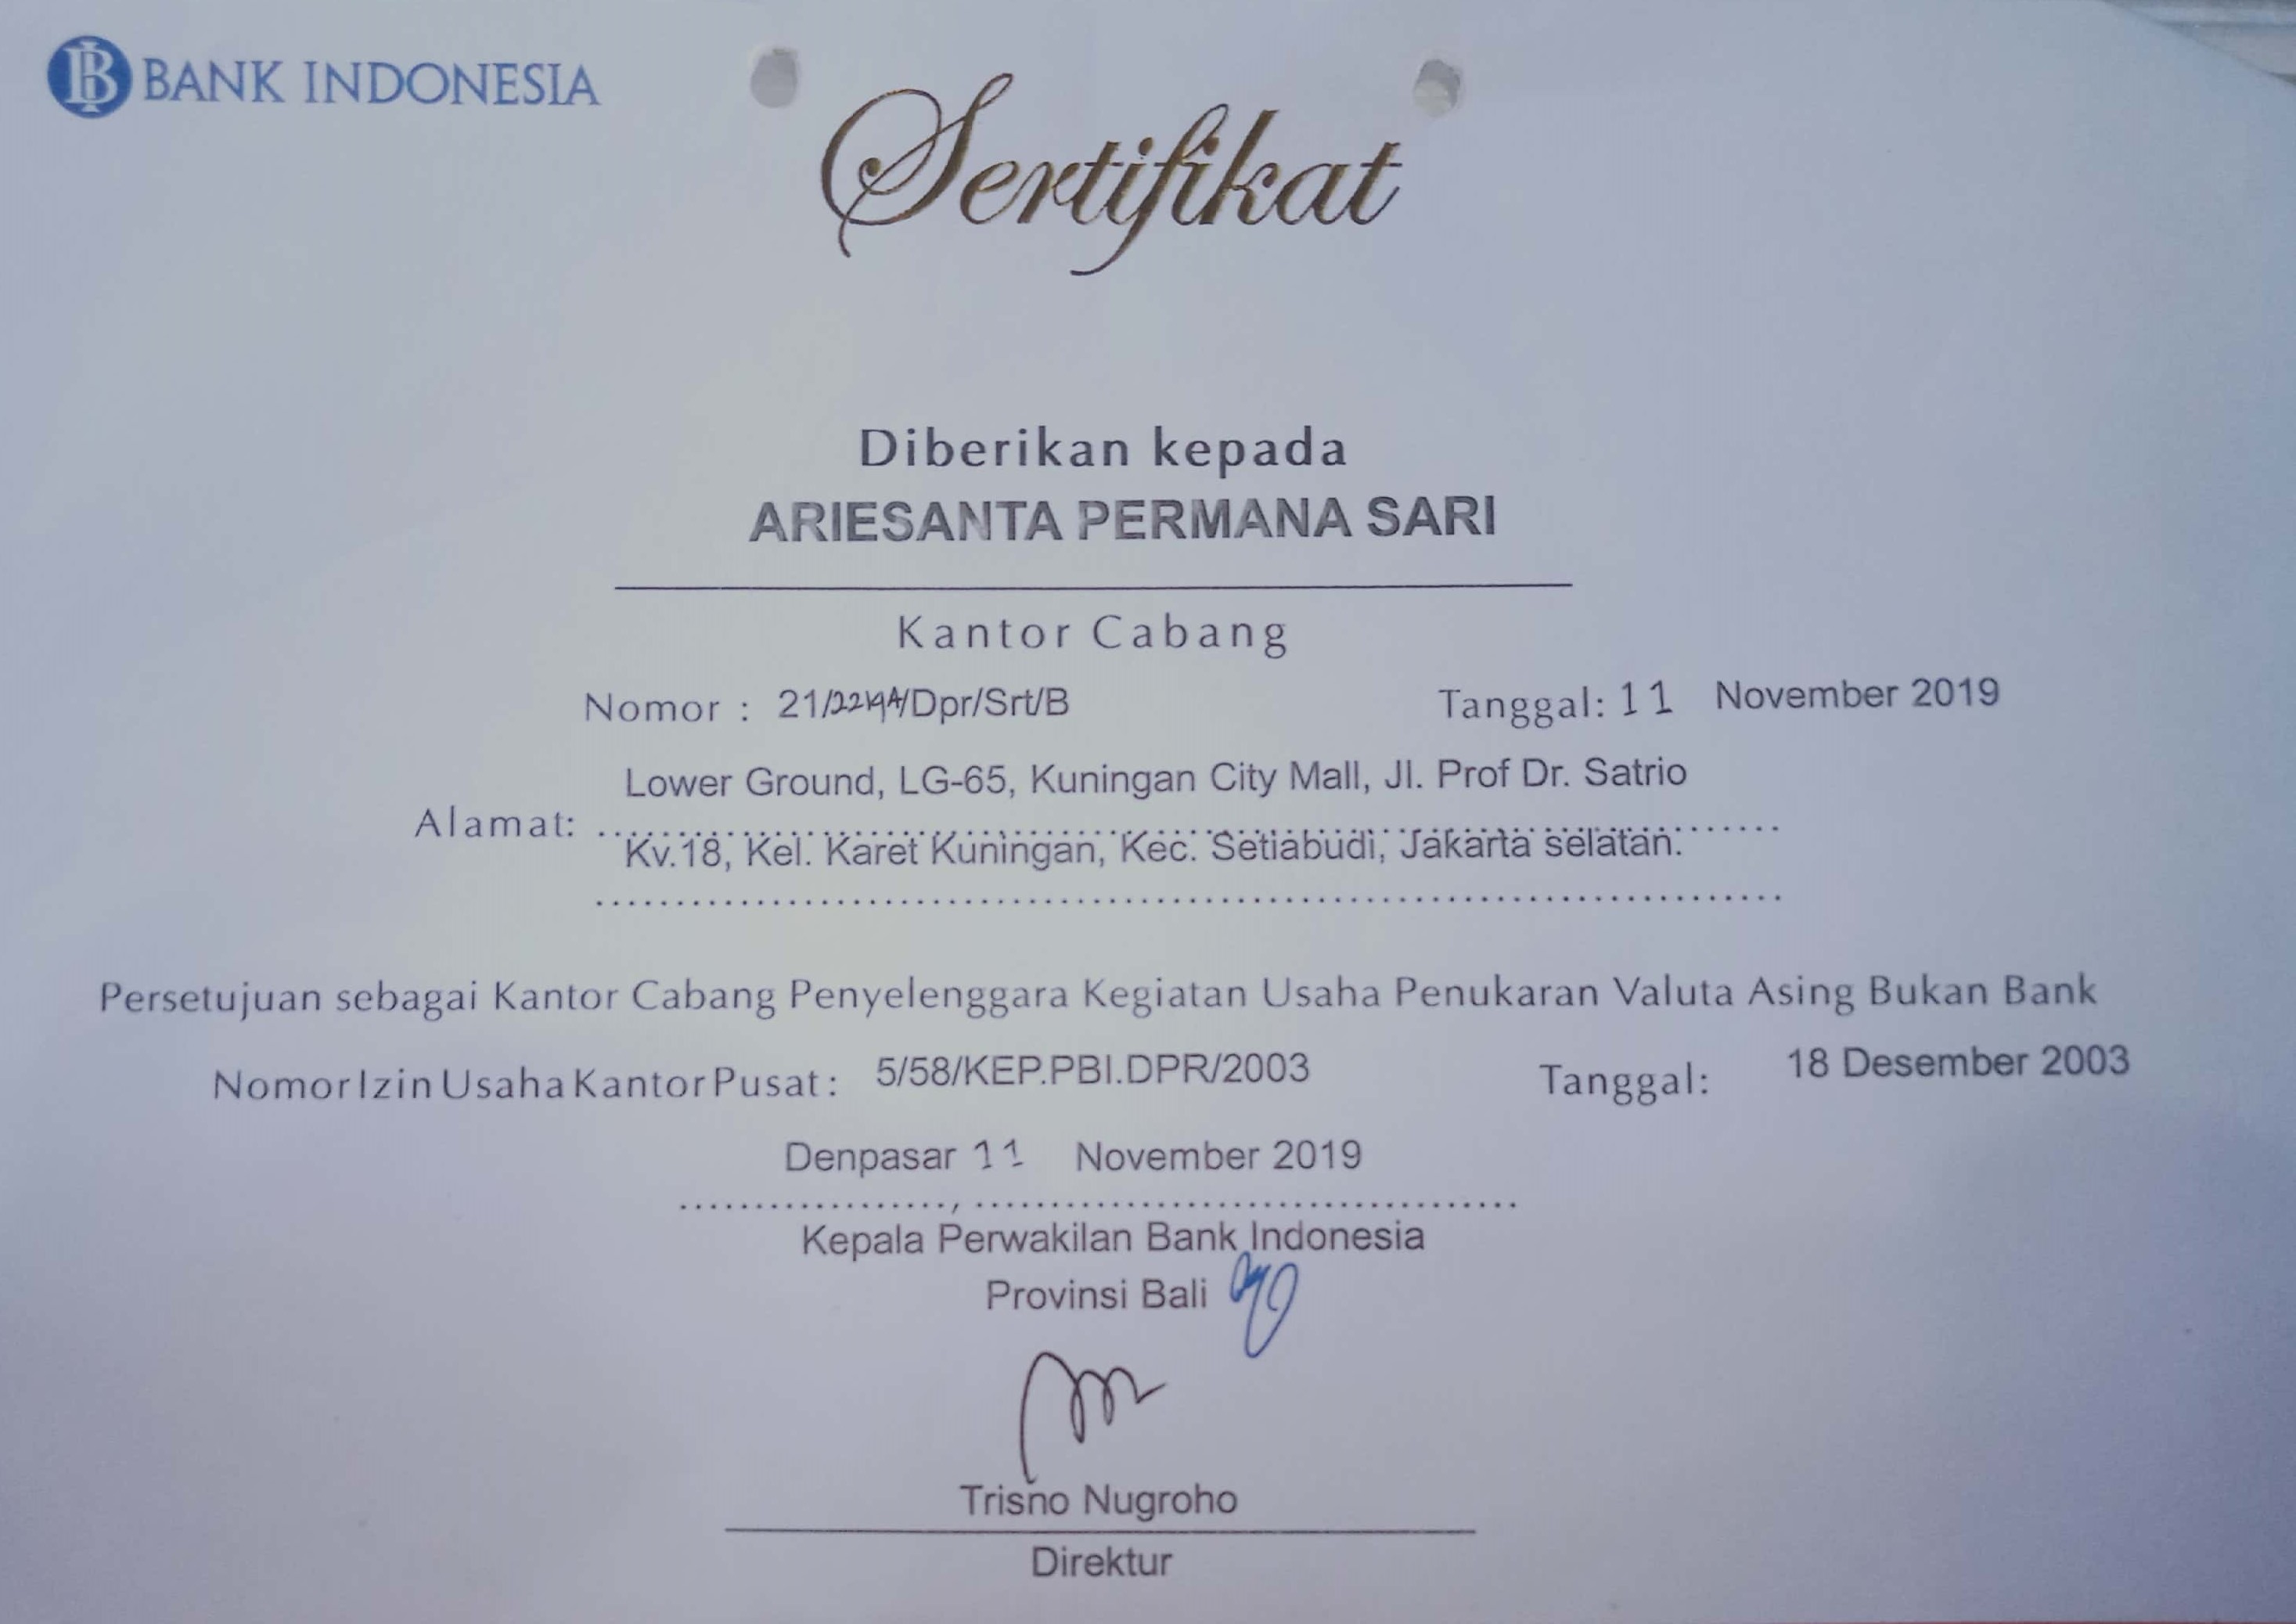 Jakarta Cerificate License